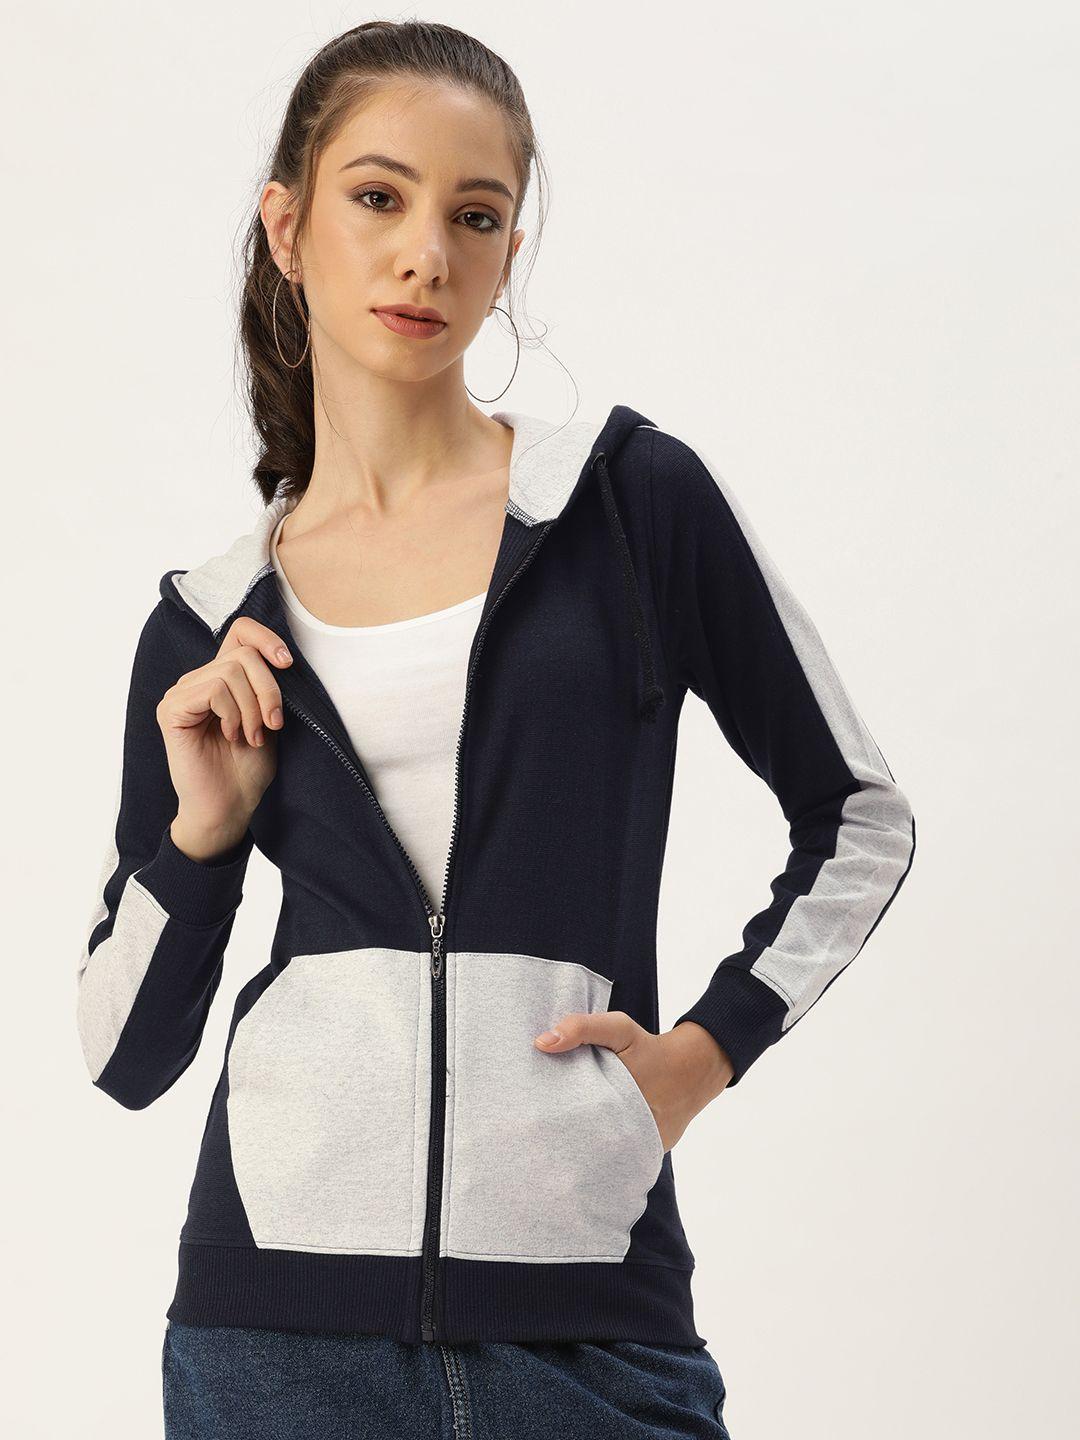 arise women navy blue & white colourblocked hooded pure cotton sweatshirt